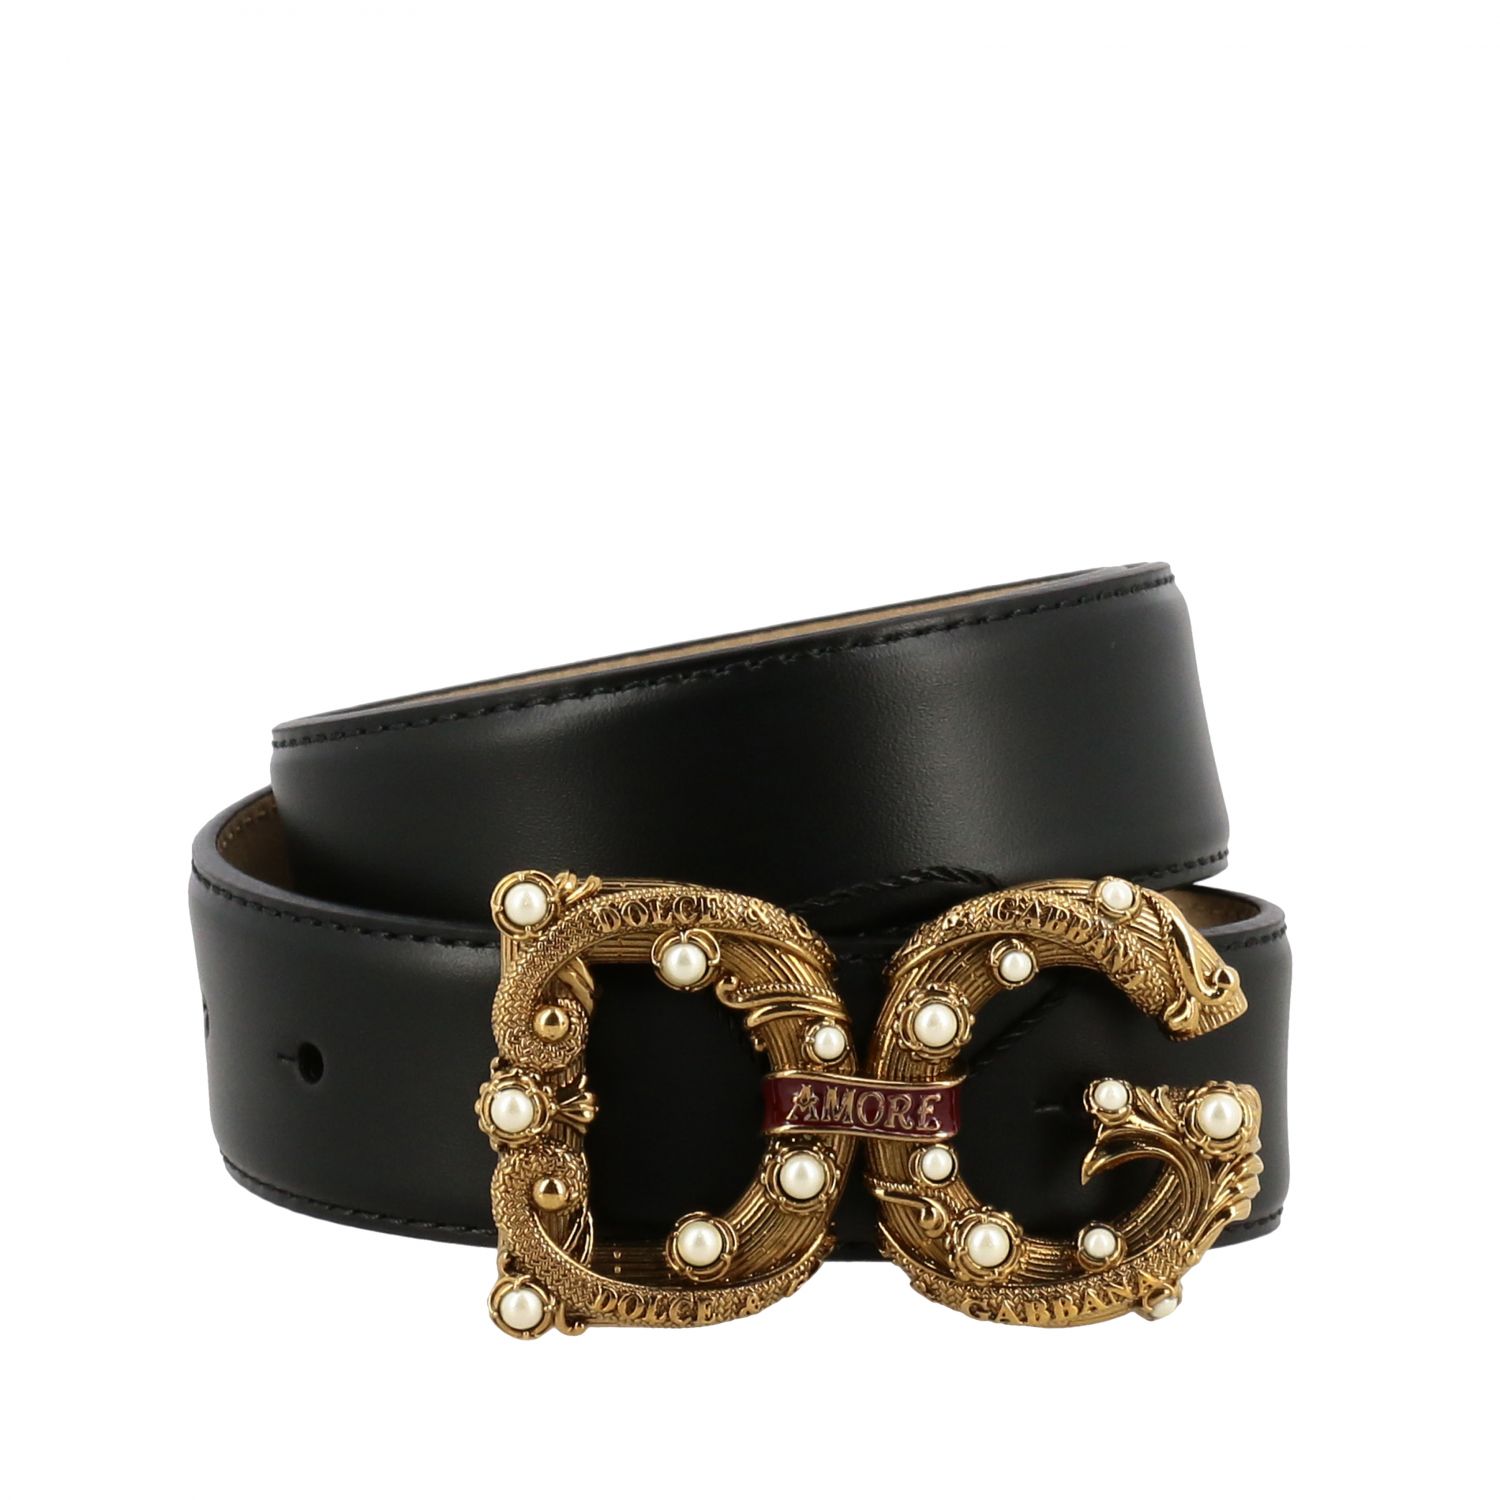 Dolce & Gabbana leather belt with DG monogram